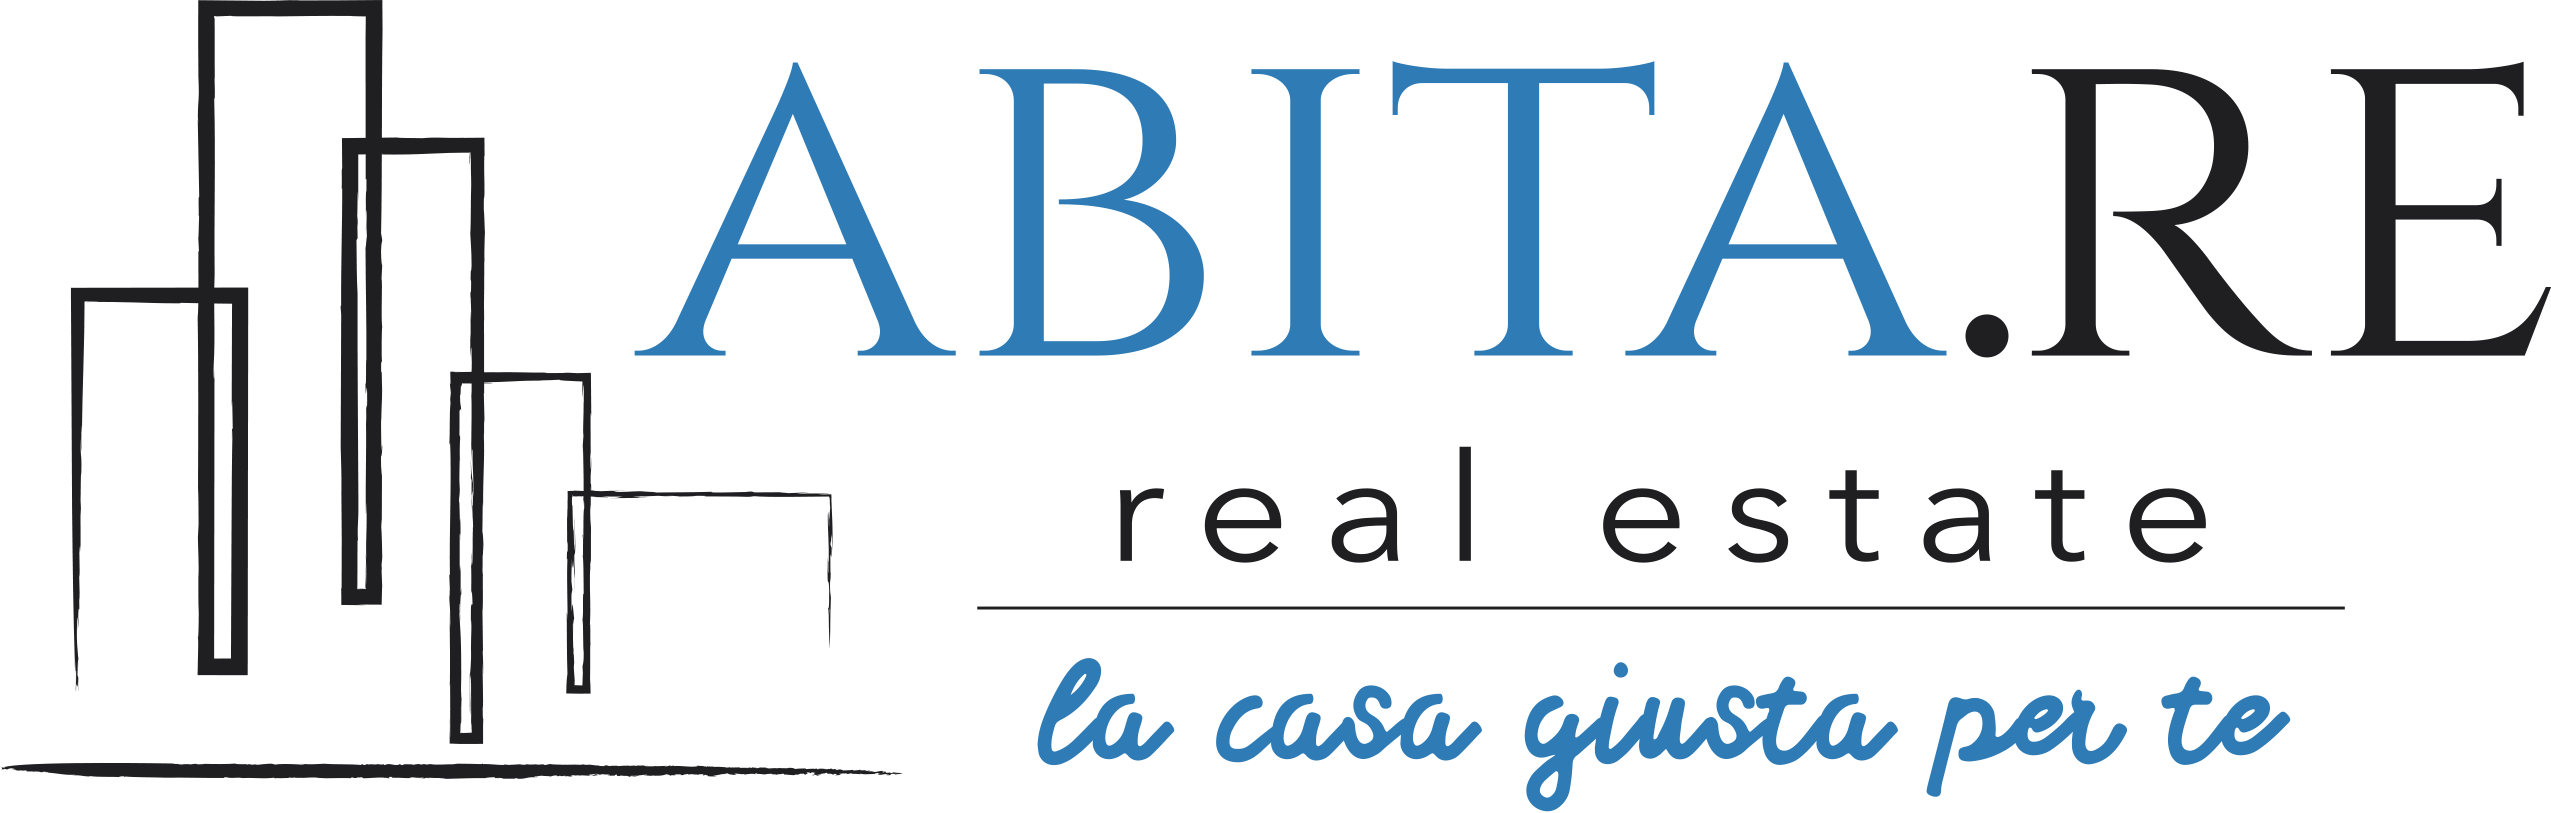 ABITA.RE Real Estate